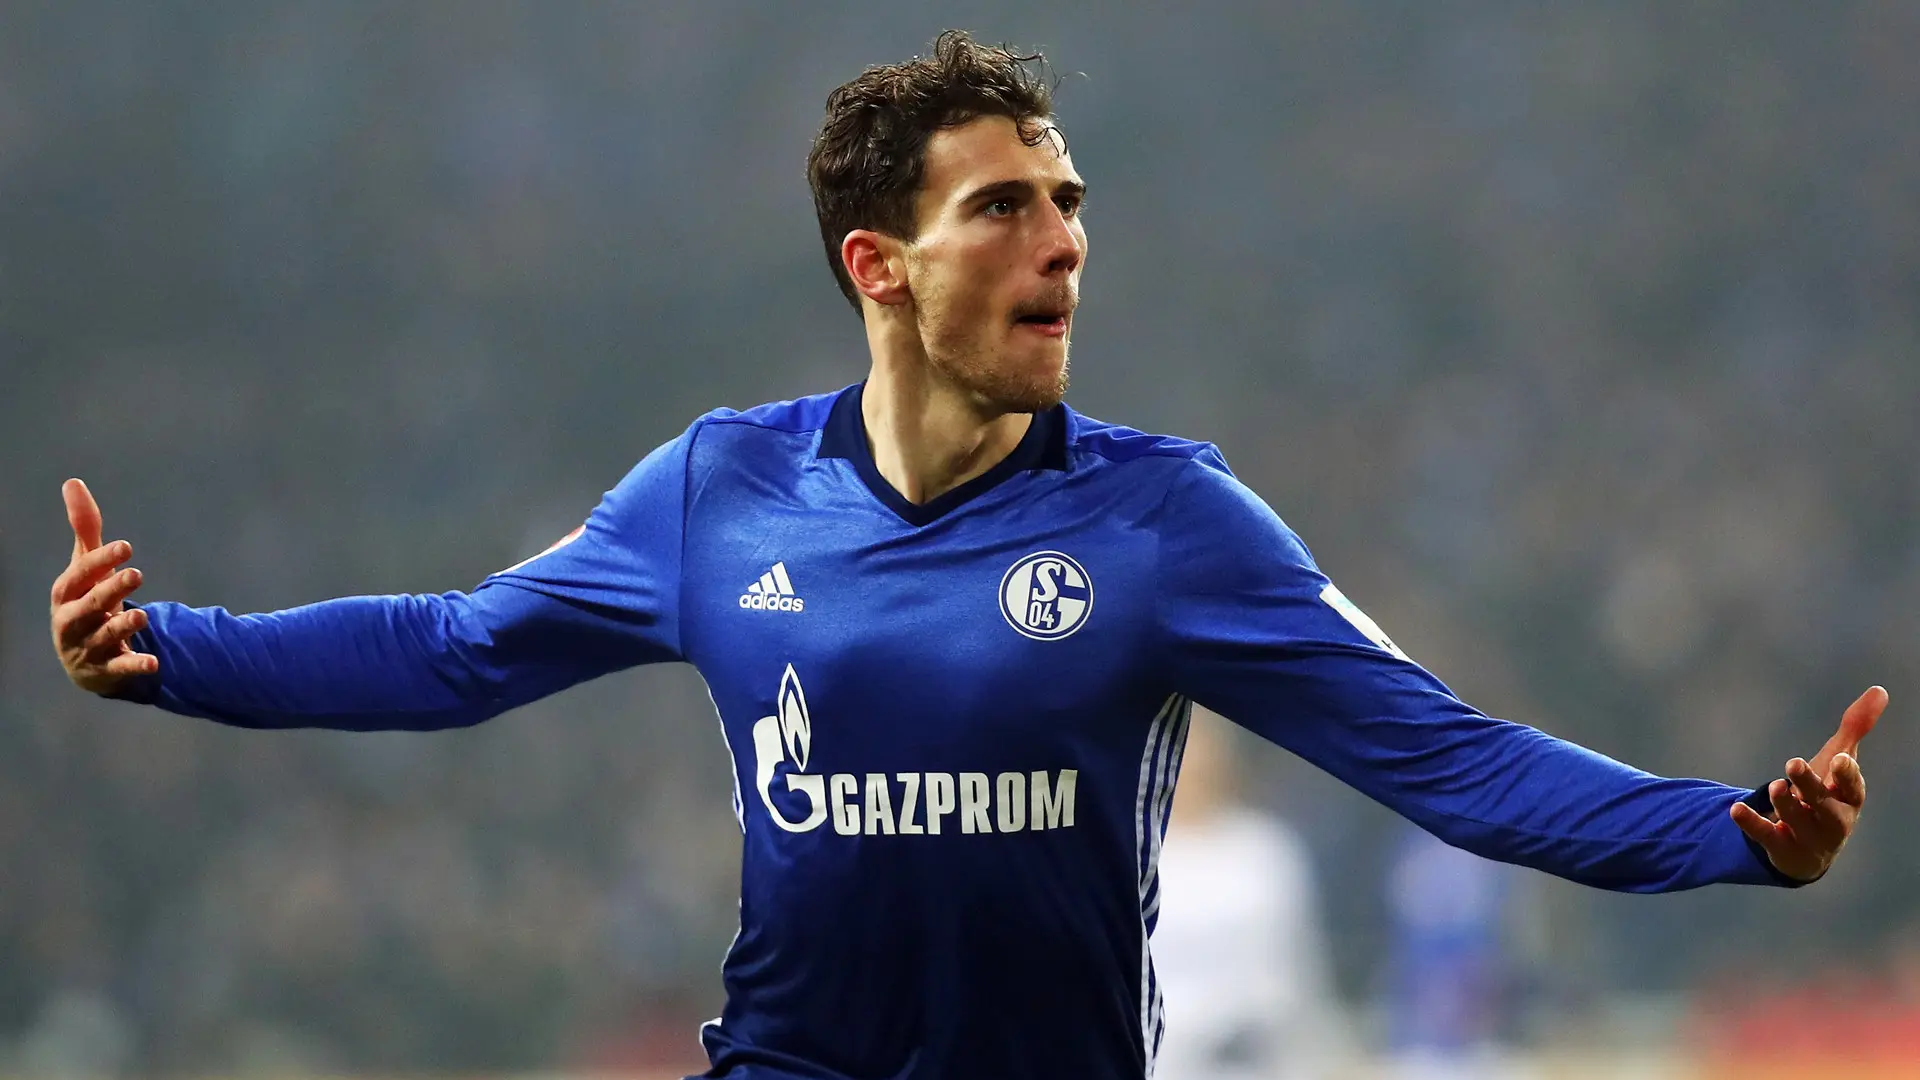 Leon Goretzka bikin marah fans Schalke 04 karena pindah ke Bayern Munchen (bundesliga.com)